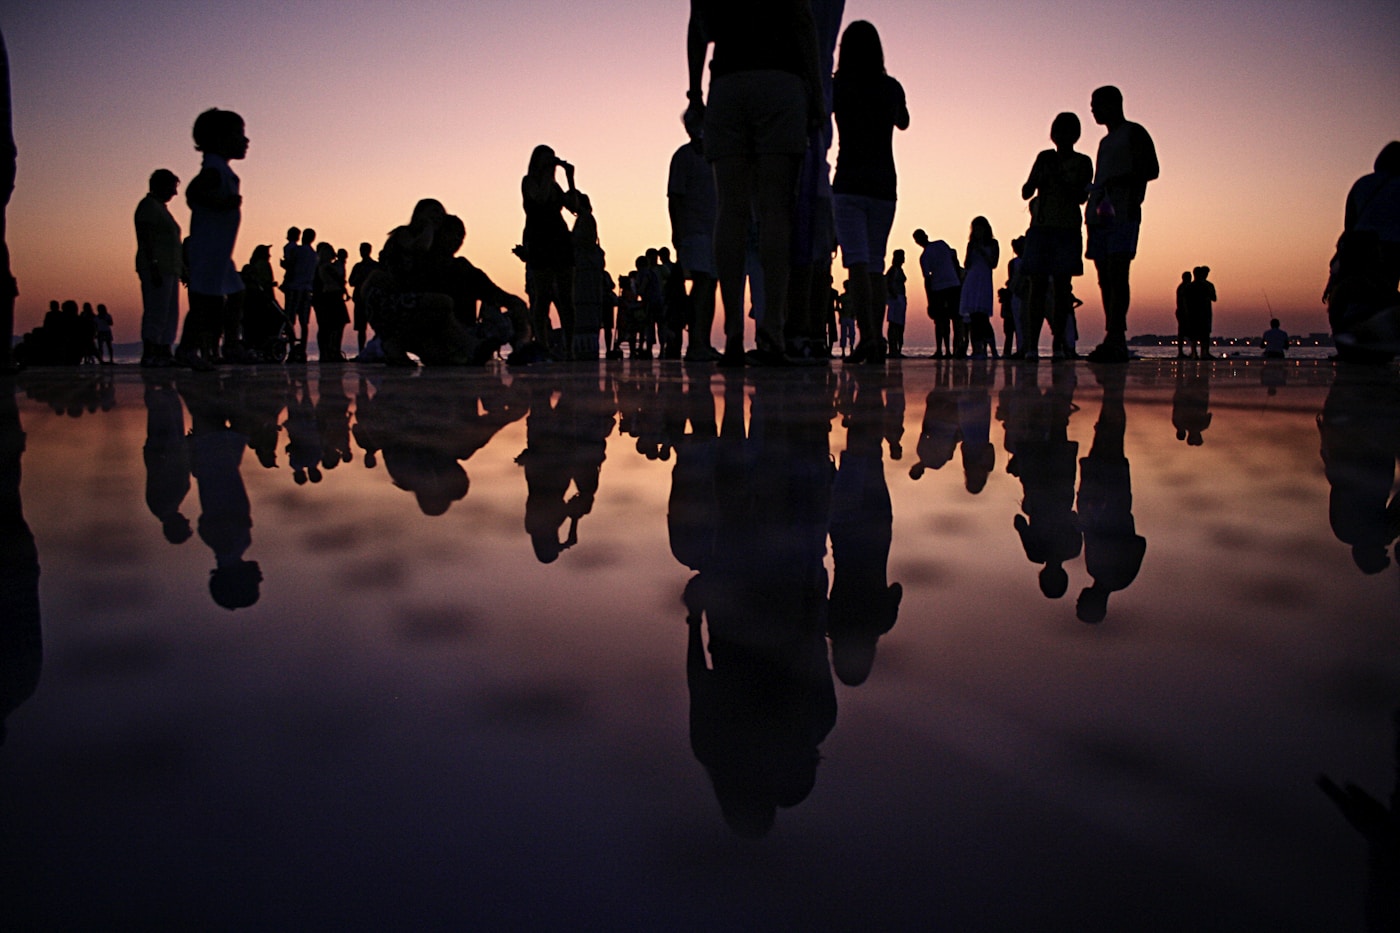 #RaiseTheGameJam. silhouette of people standing on mirror during golden hour